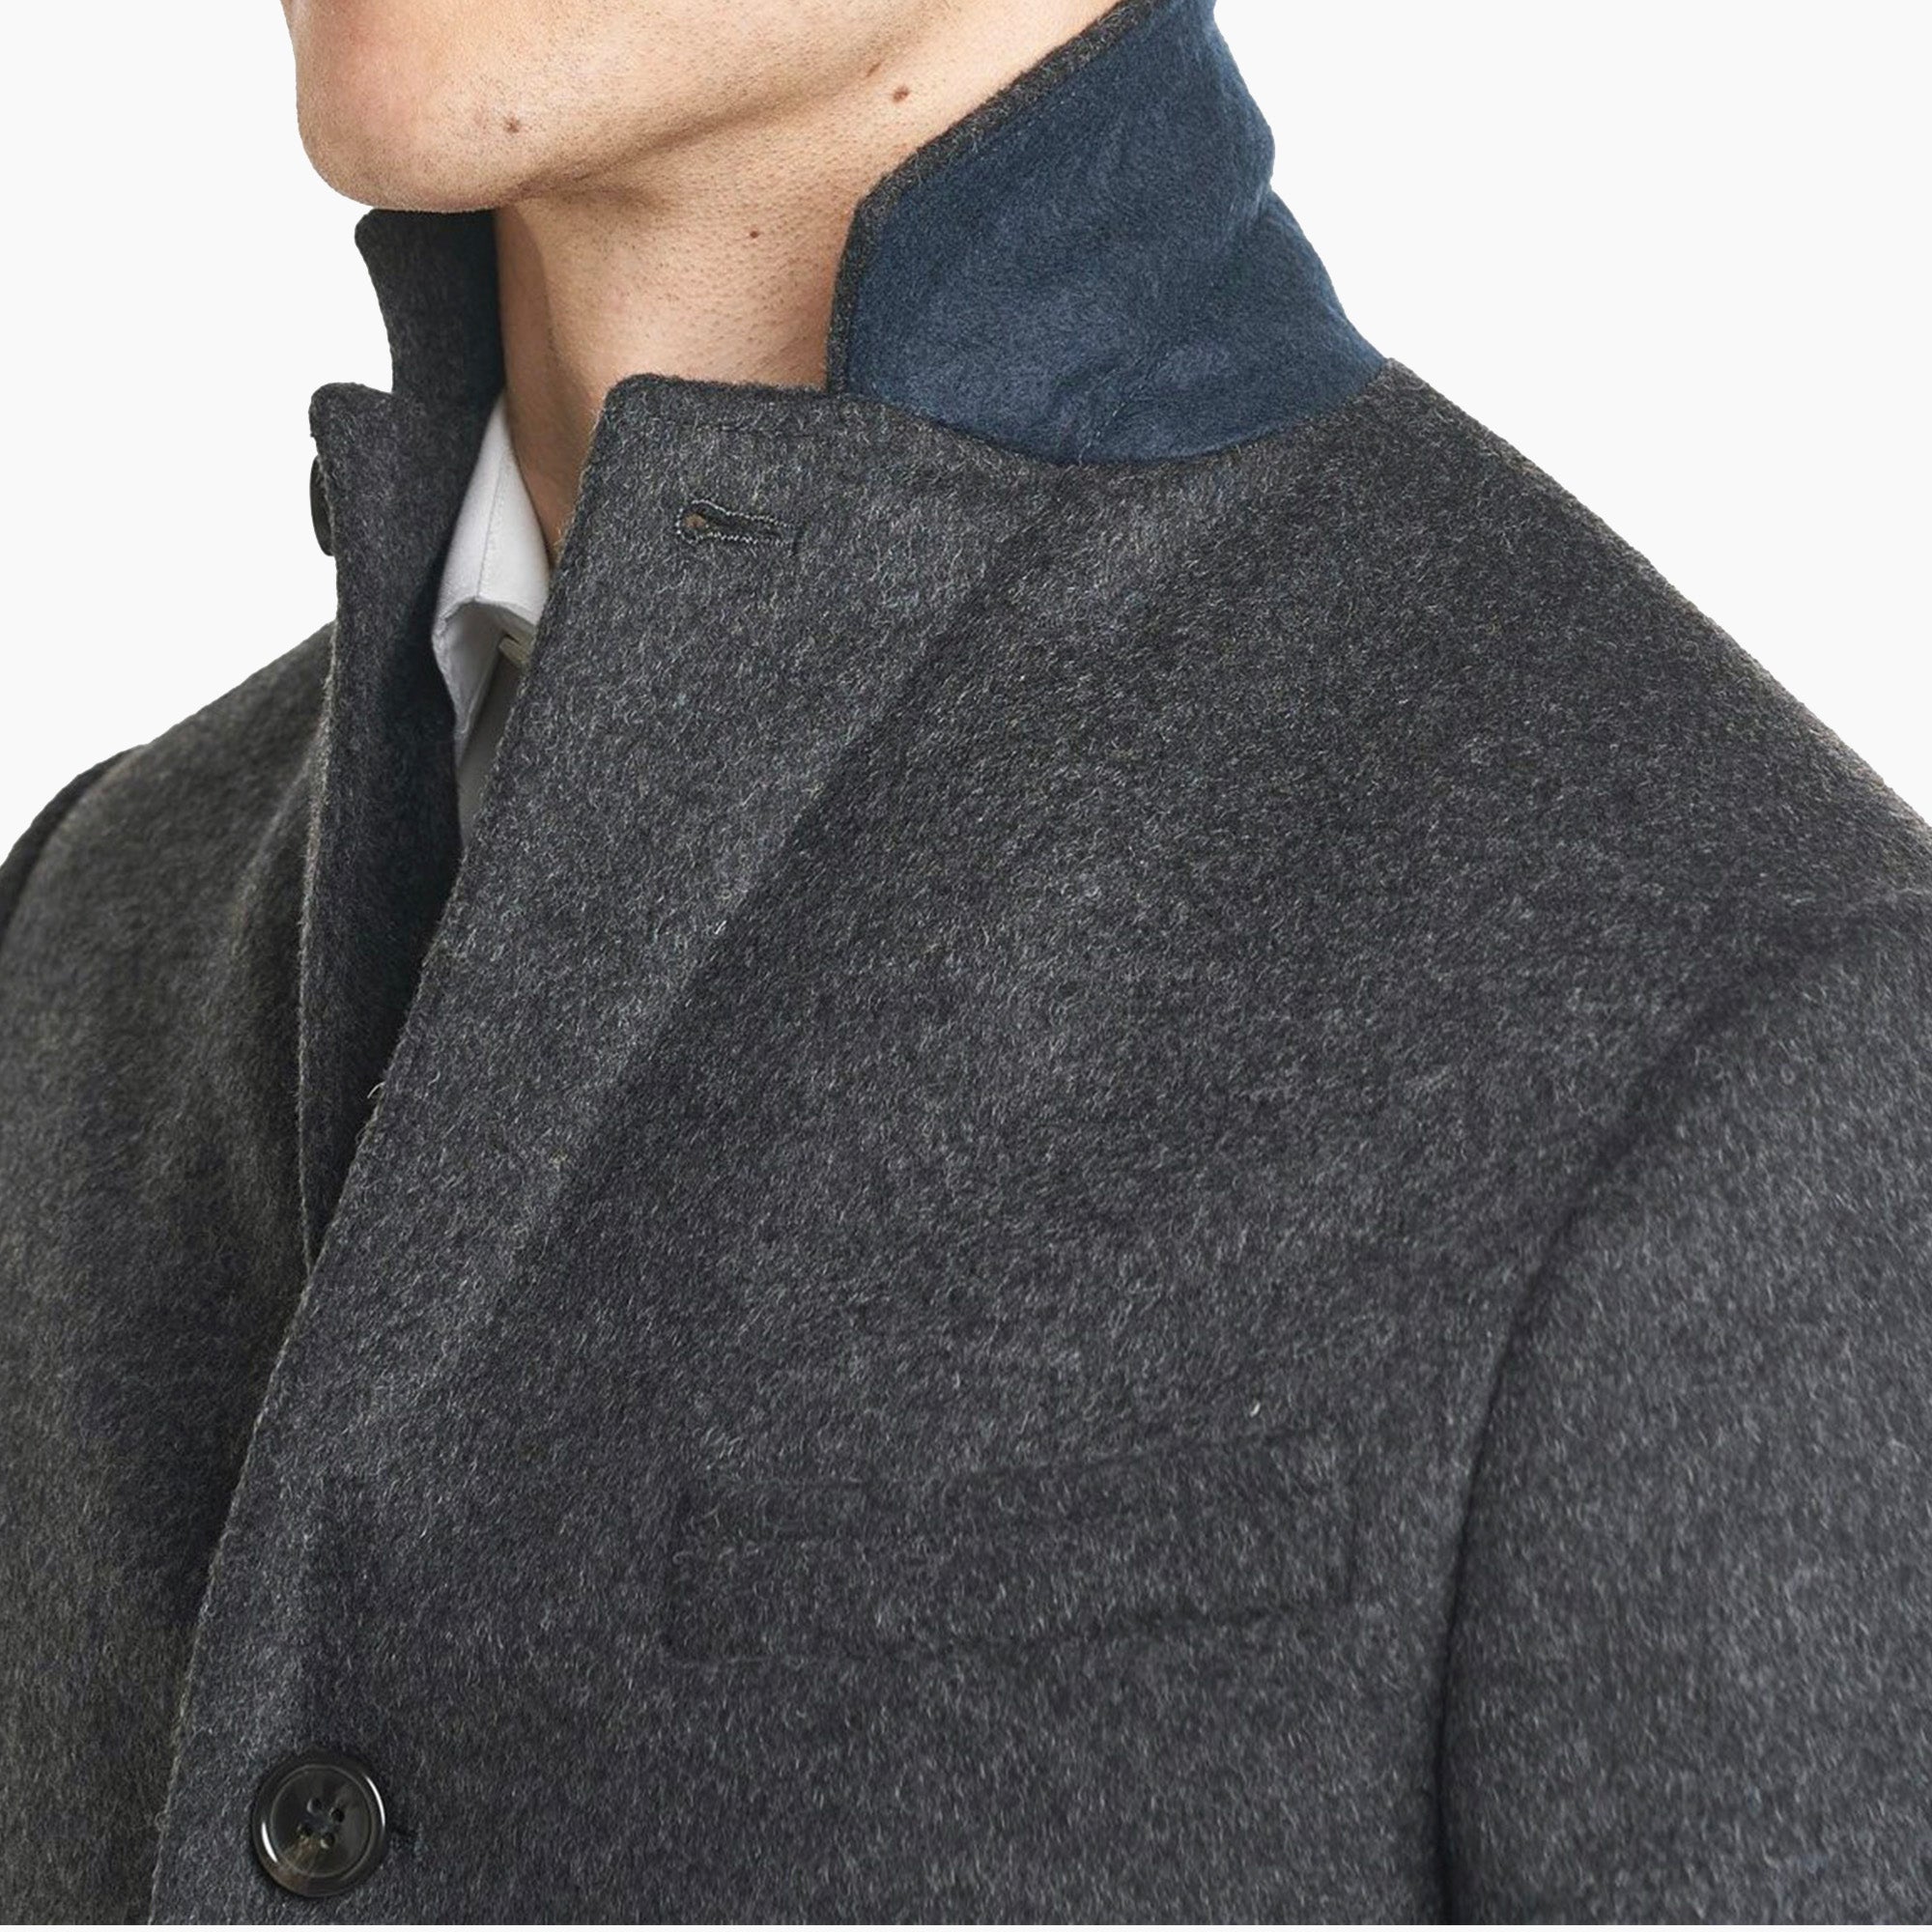 Fulton Wool Cashmere Topcoat - Charcoal